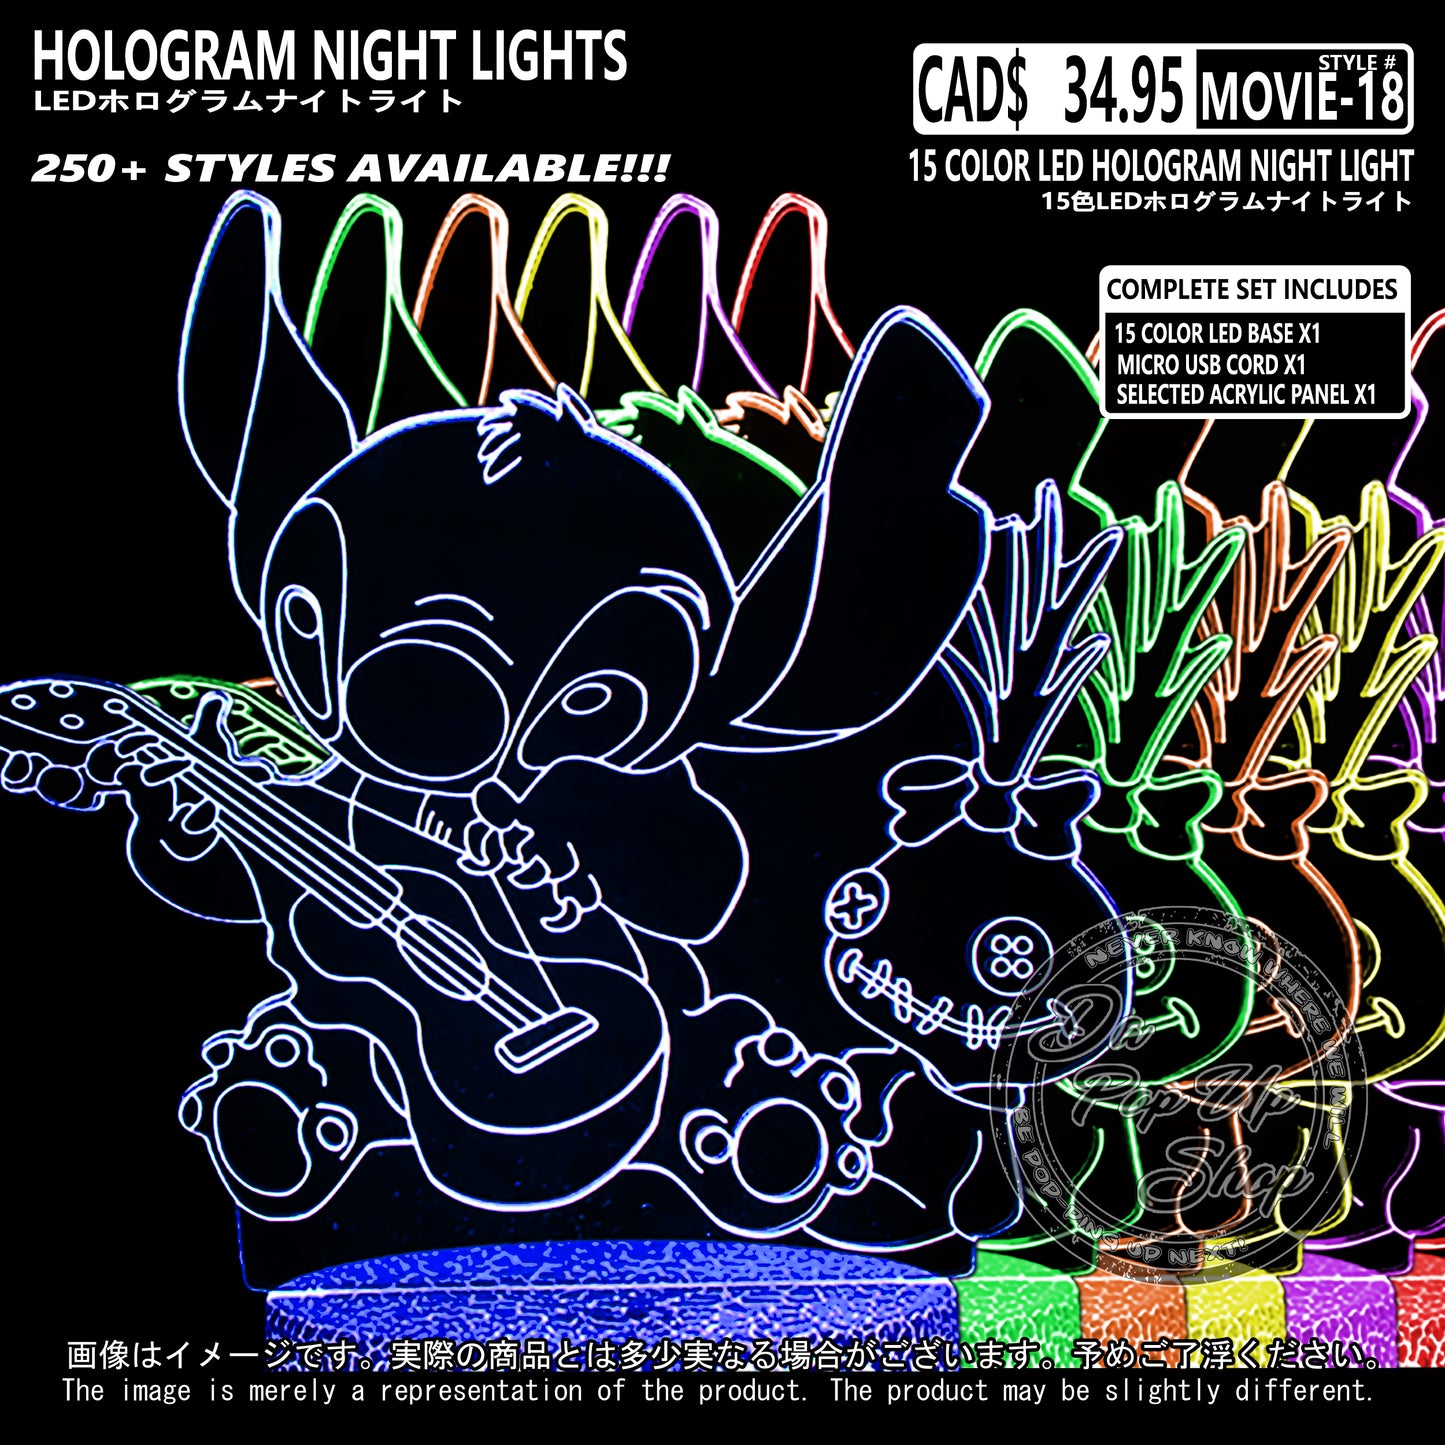 (MOVIE-18) Lilo & Stitch Hologram LED Night Light